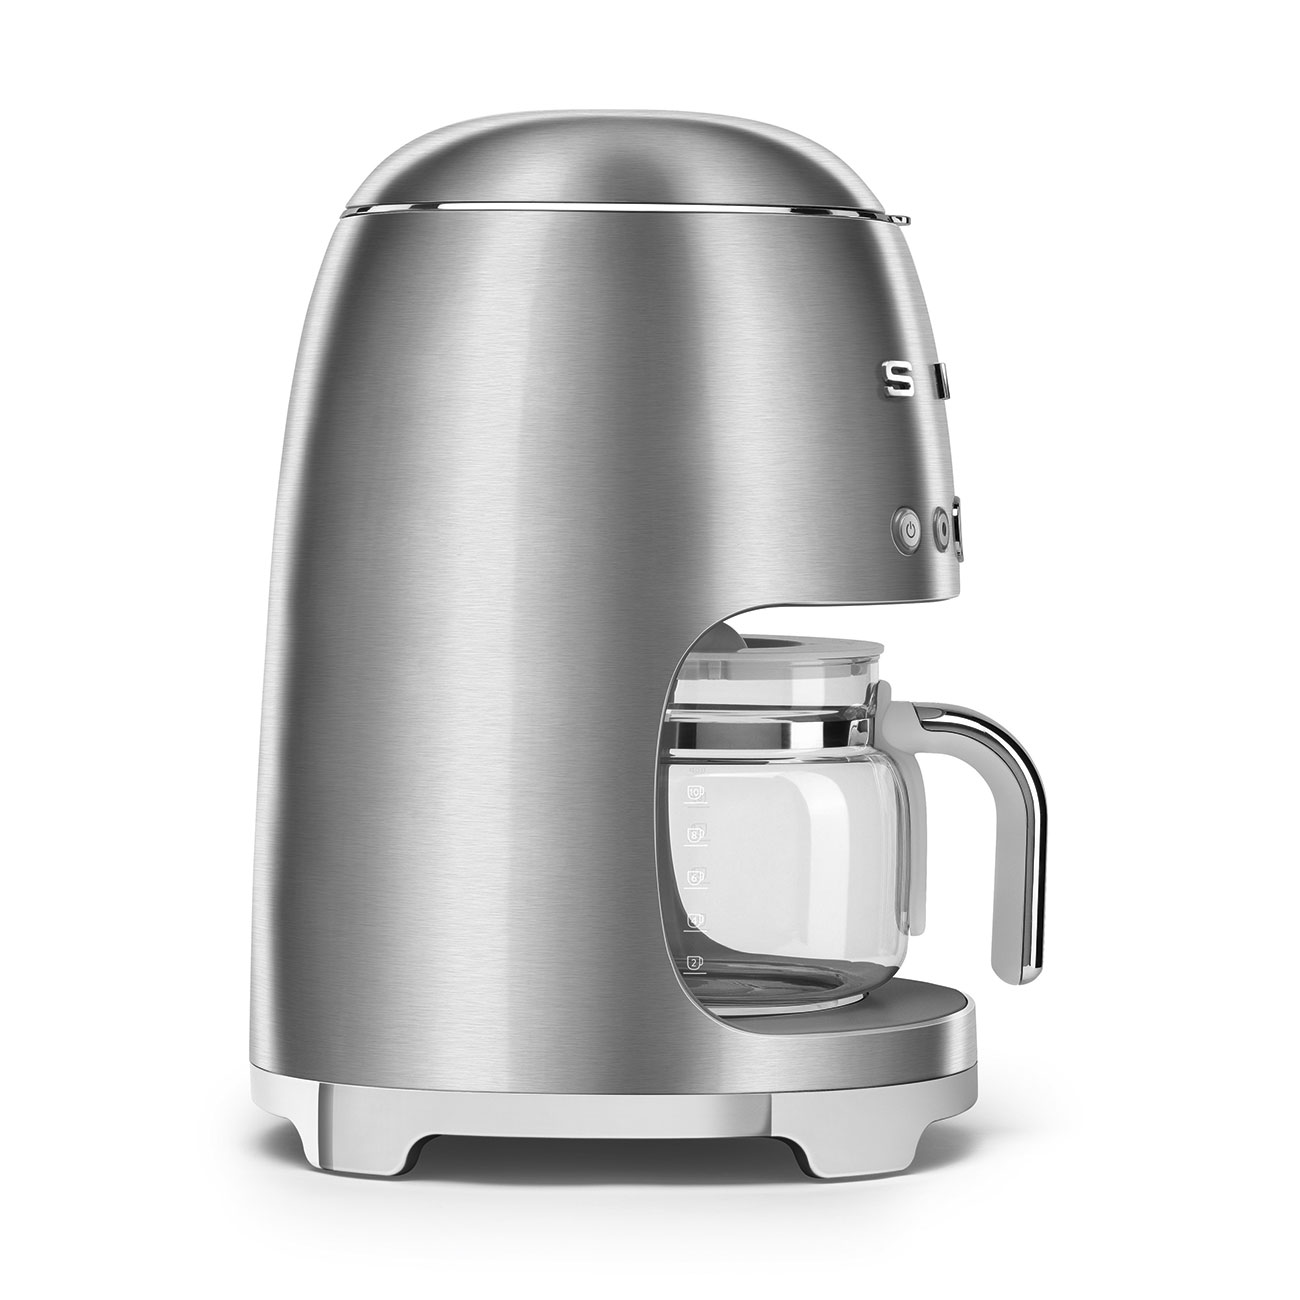 Stainless steel Drip Filter Coffee Machine - DCF02SSUK - Smeg_3